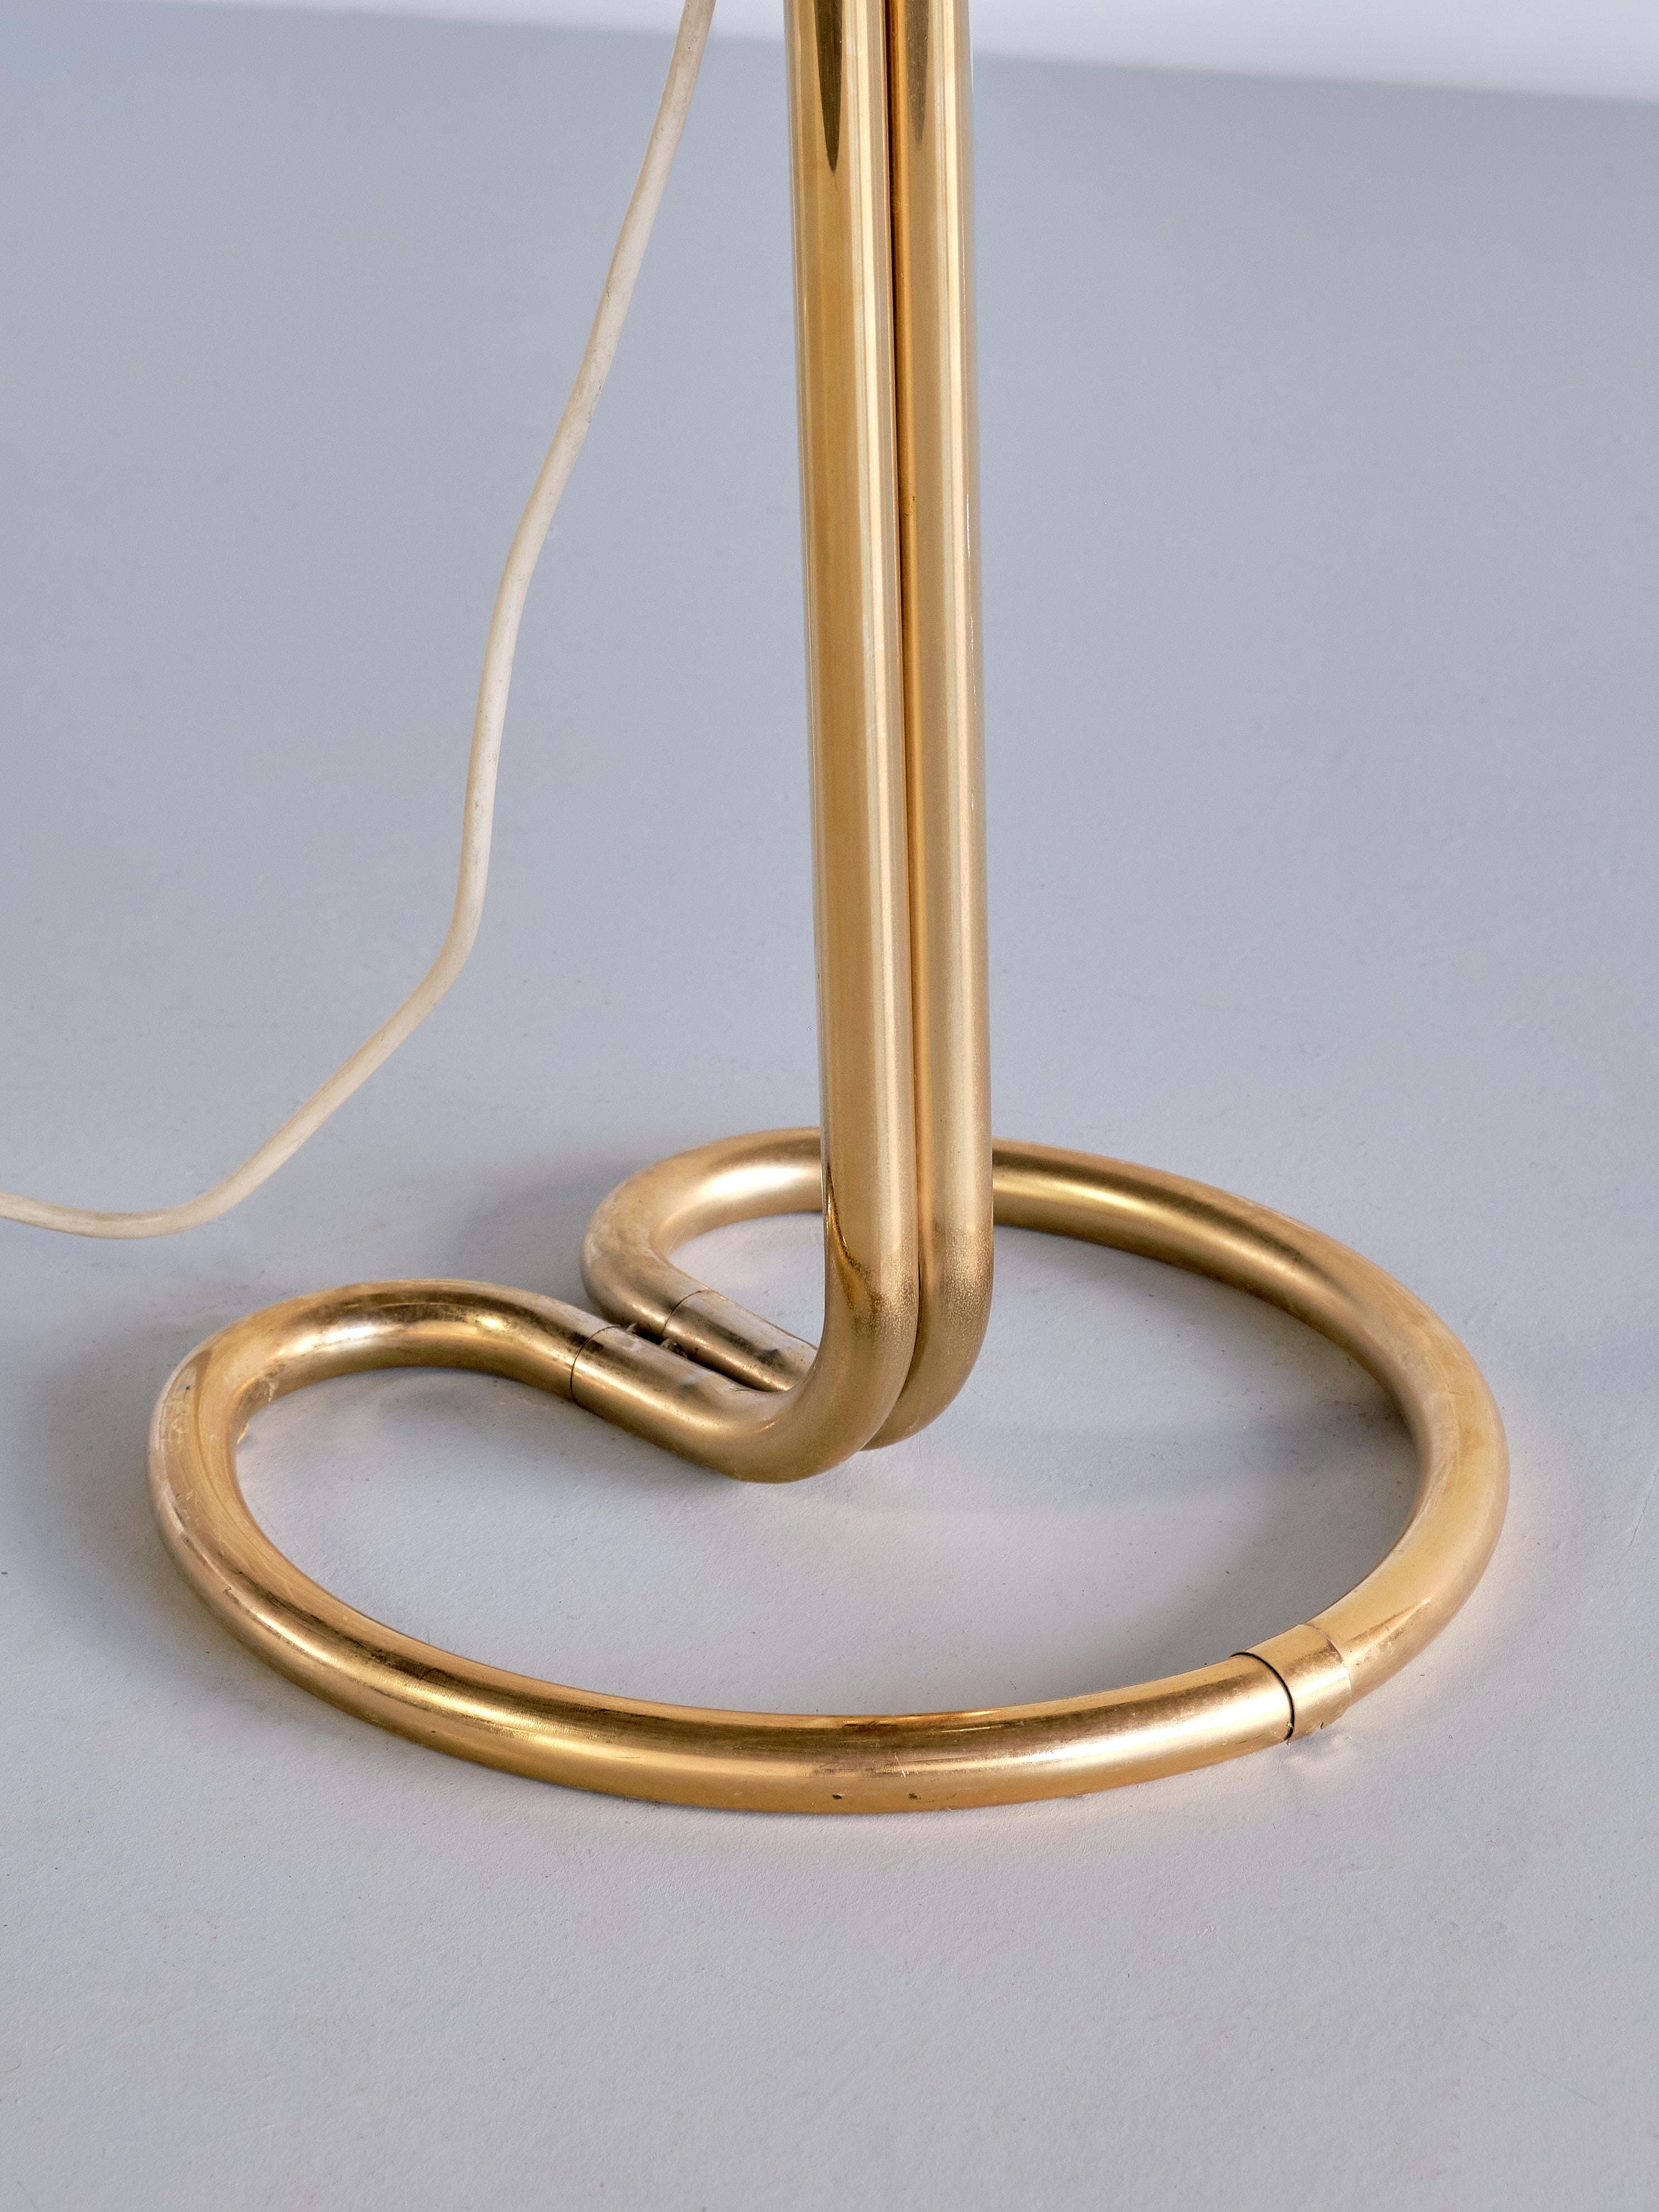 Anders Pehrson 'Bumling' Floor Lamp in Brass, Atelje Lyktan, Sweden, 1968 For Sale 3